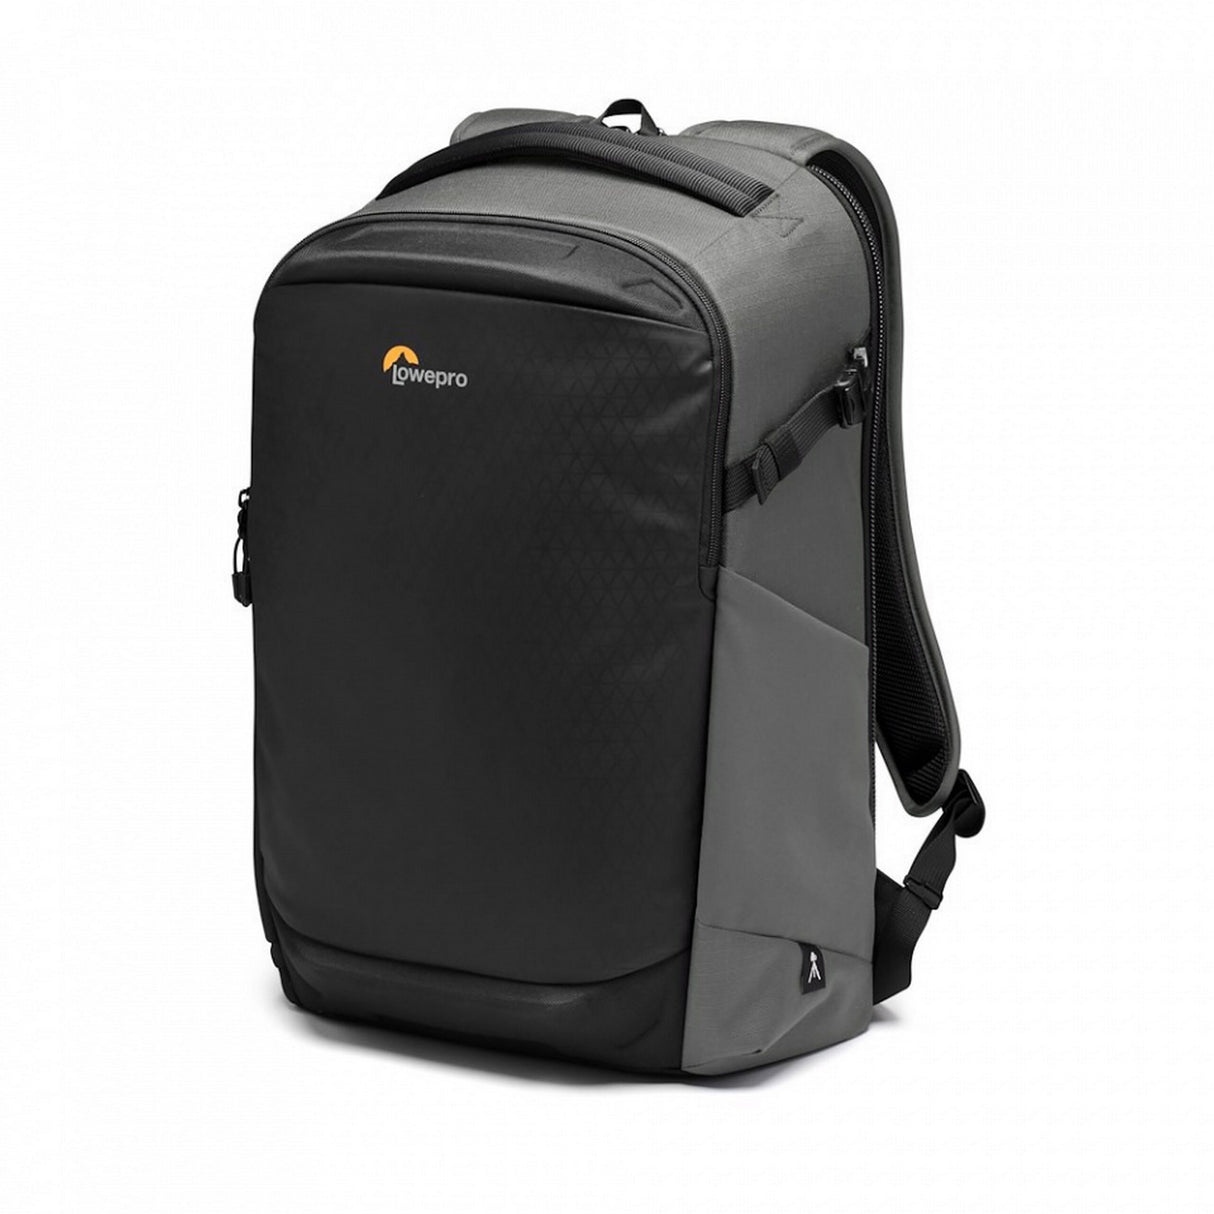 Lowepro LP37353 Flipside Backpack 400 AW III, Dark Grey